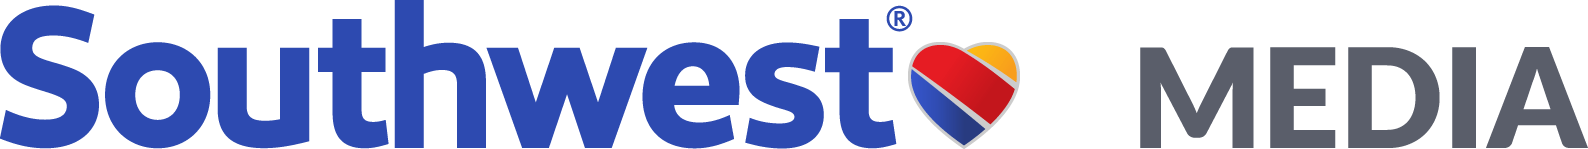 Southwest Airlines Magazine Logo - Southwest Airlines Newsroom